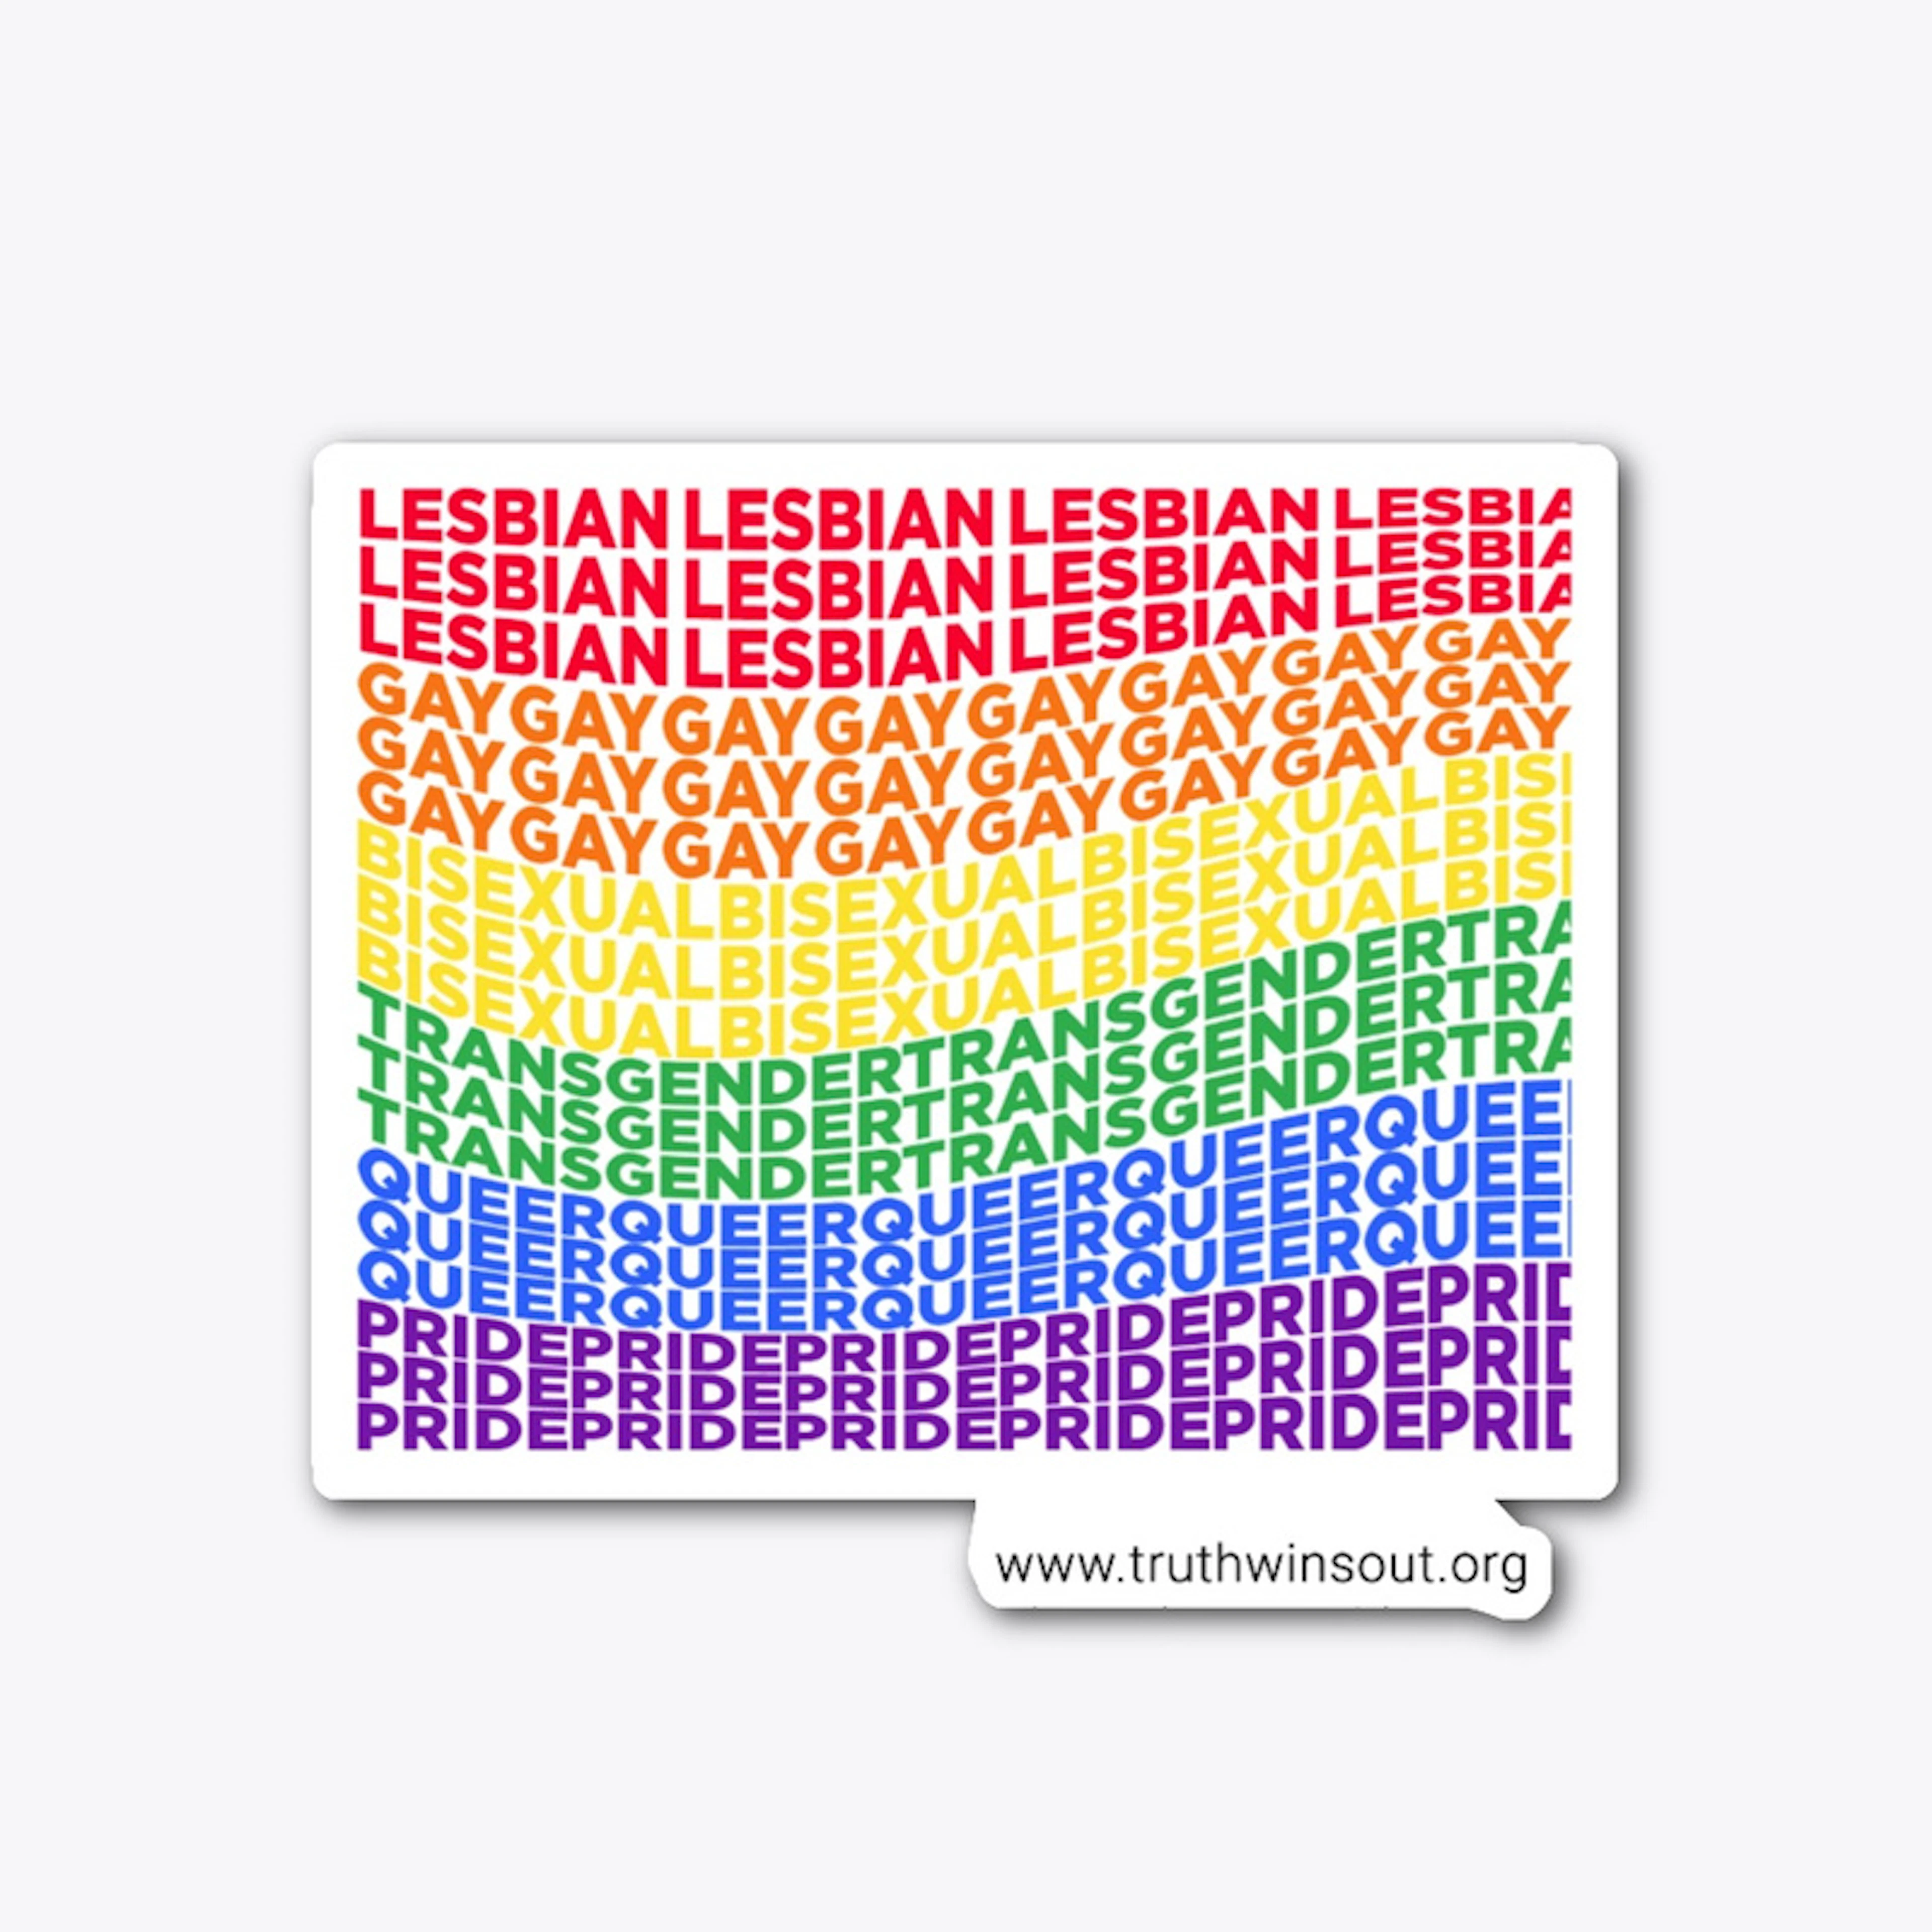 LGBTQ PRIDE!🌈